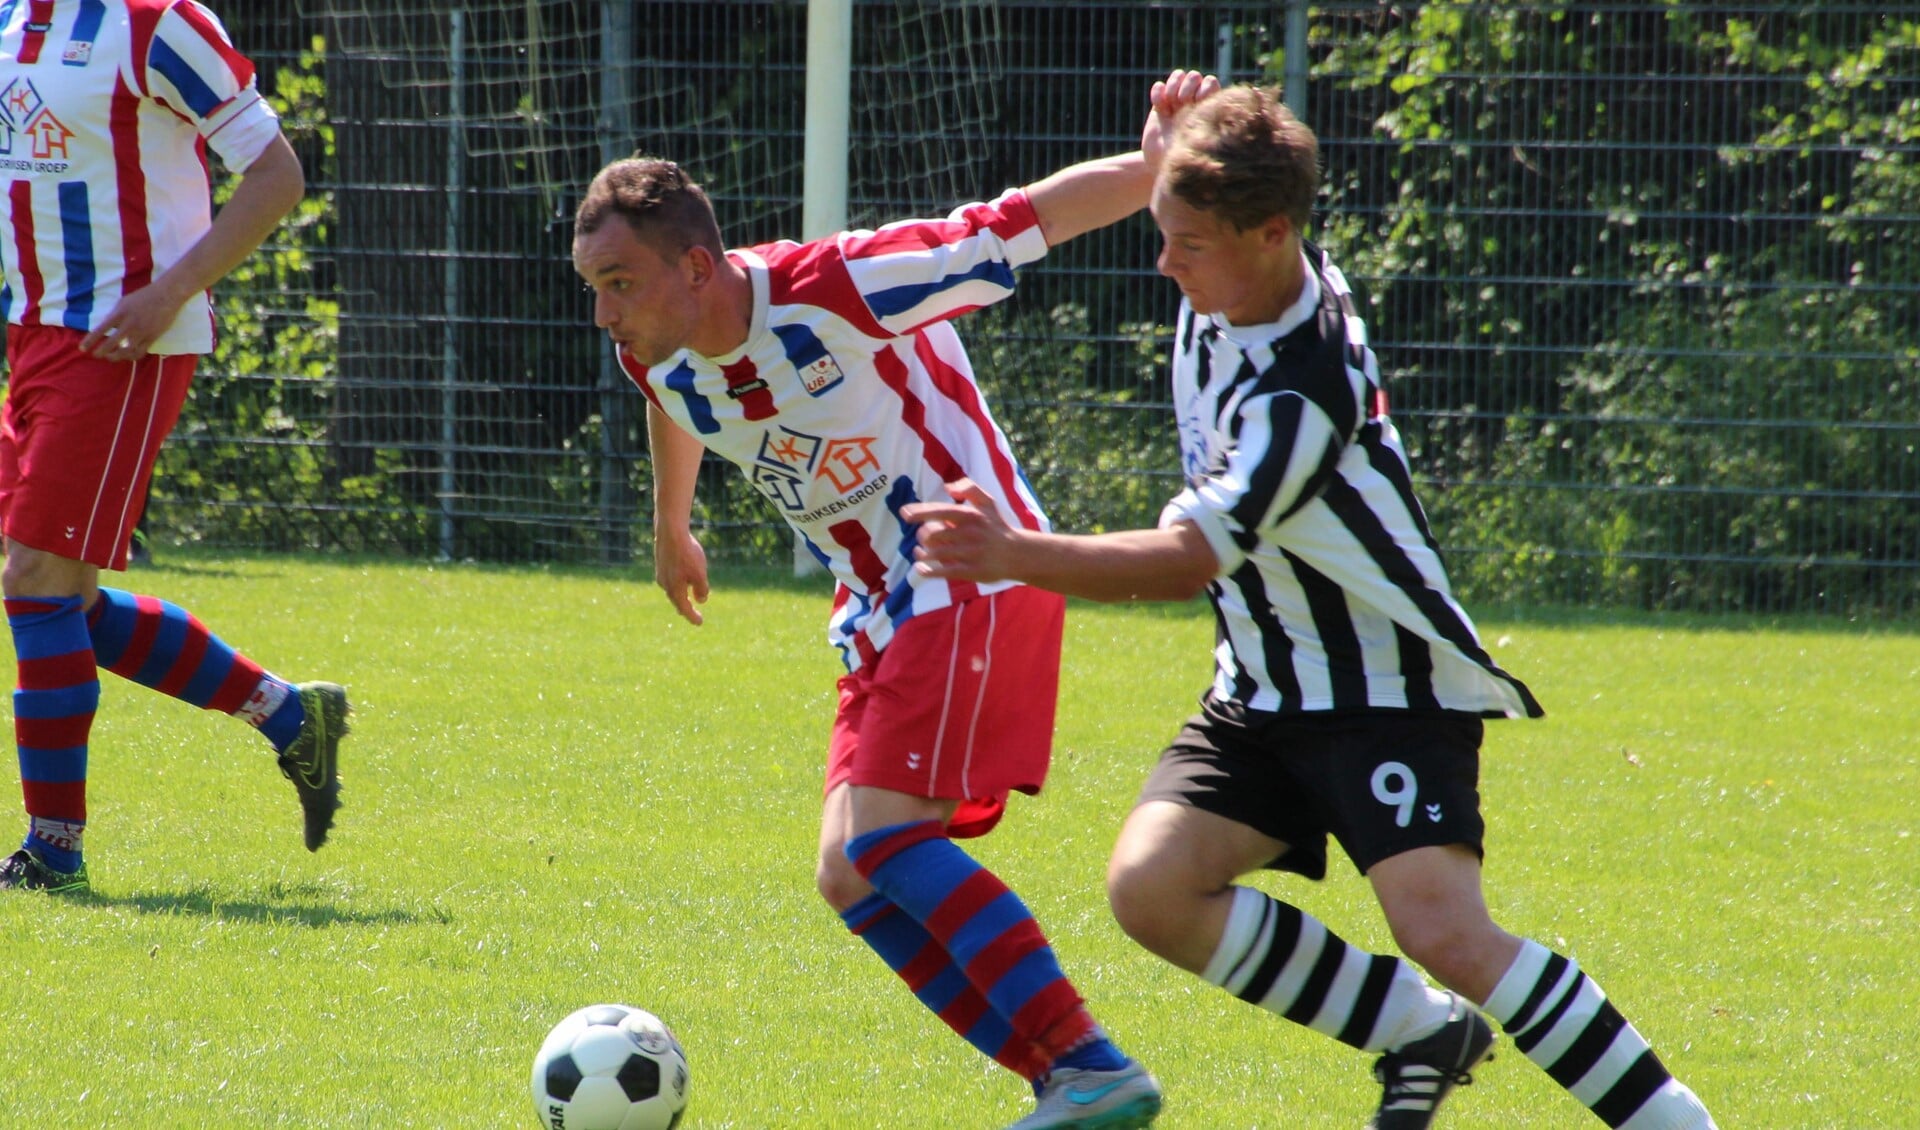 Ulftse Boys middenvelder Rick Bannink aan de bal in de wedstrijd tegen NVC Netterden. Foto: Ulftse Boys PR